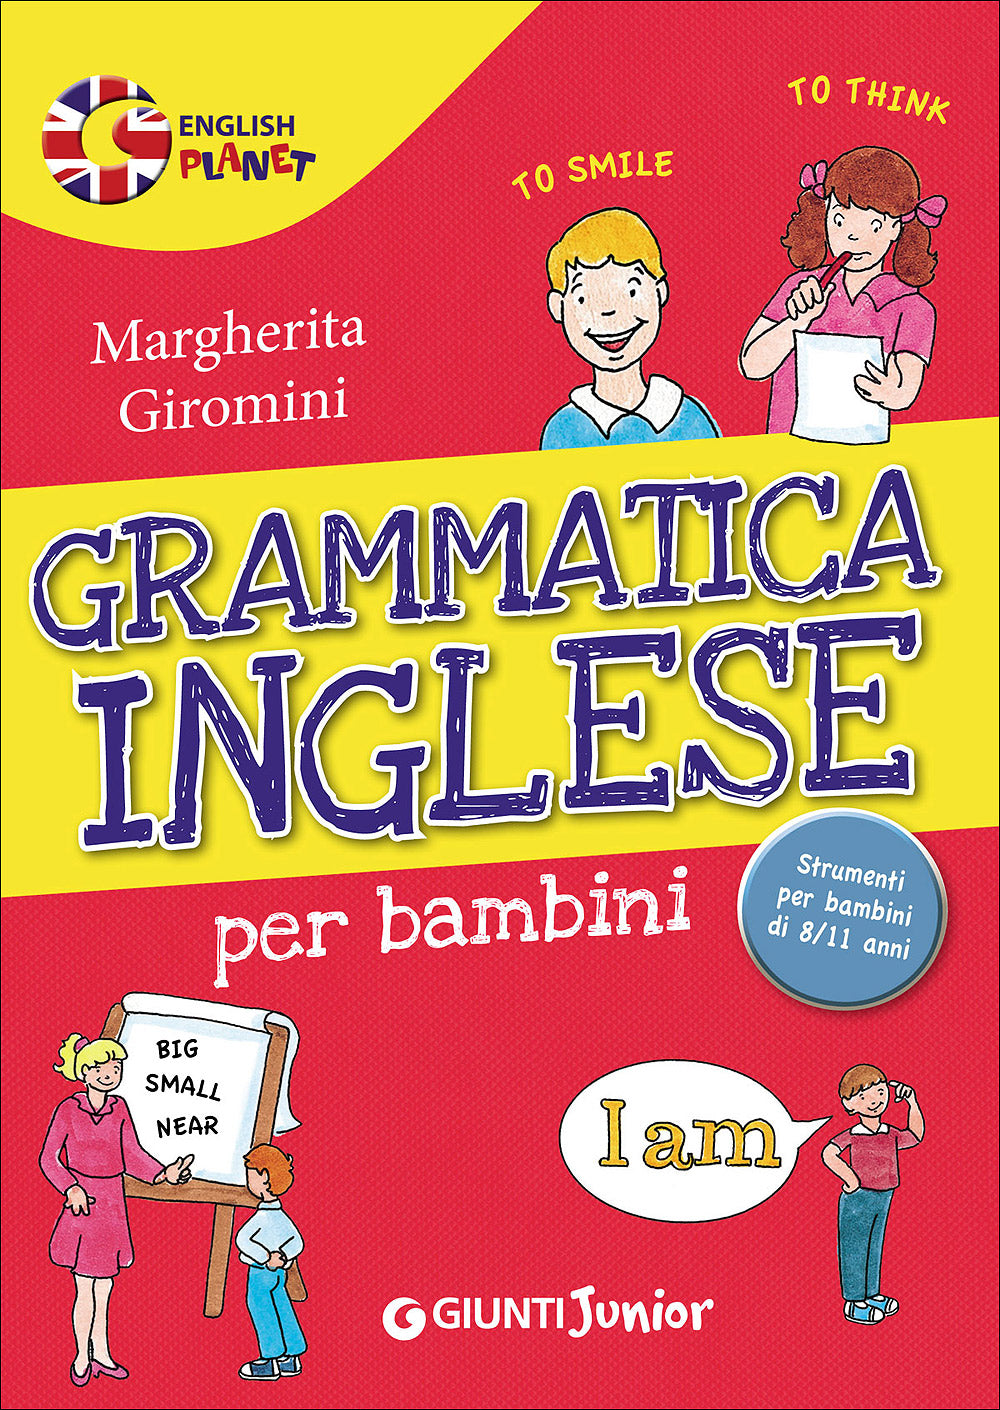 Grammatica inglese per bambini, Margherita Giromini